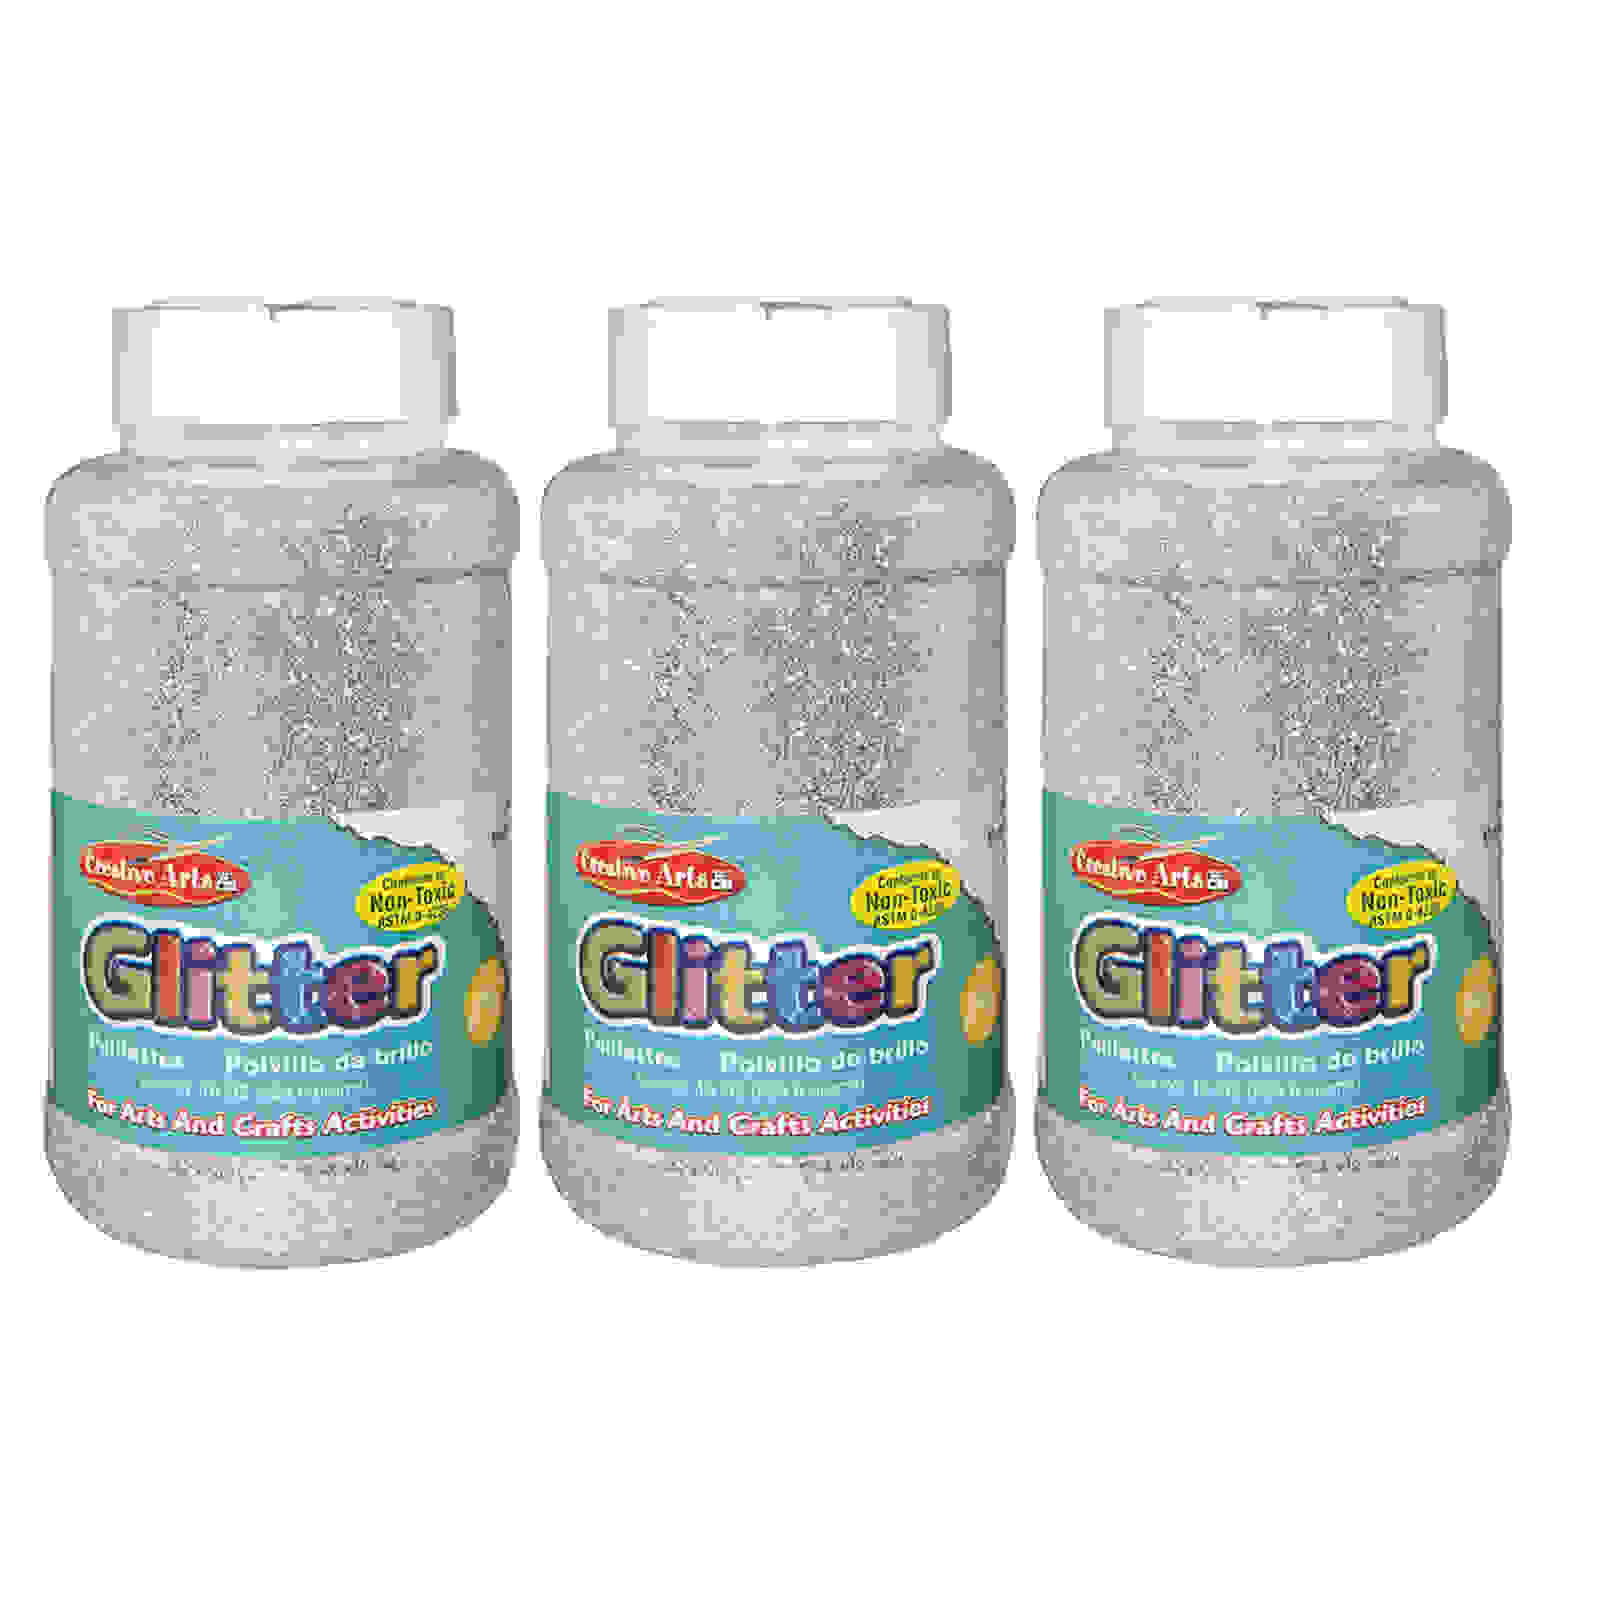 Creative Arts Glitter, 1 lb. Bottle, Silver, Pack of 3